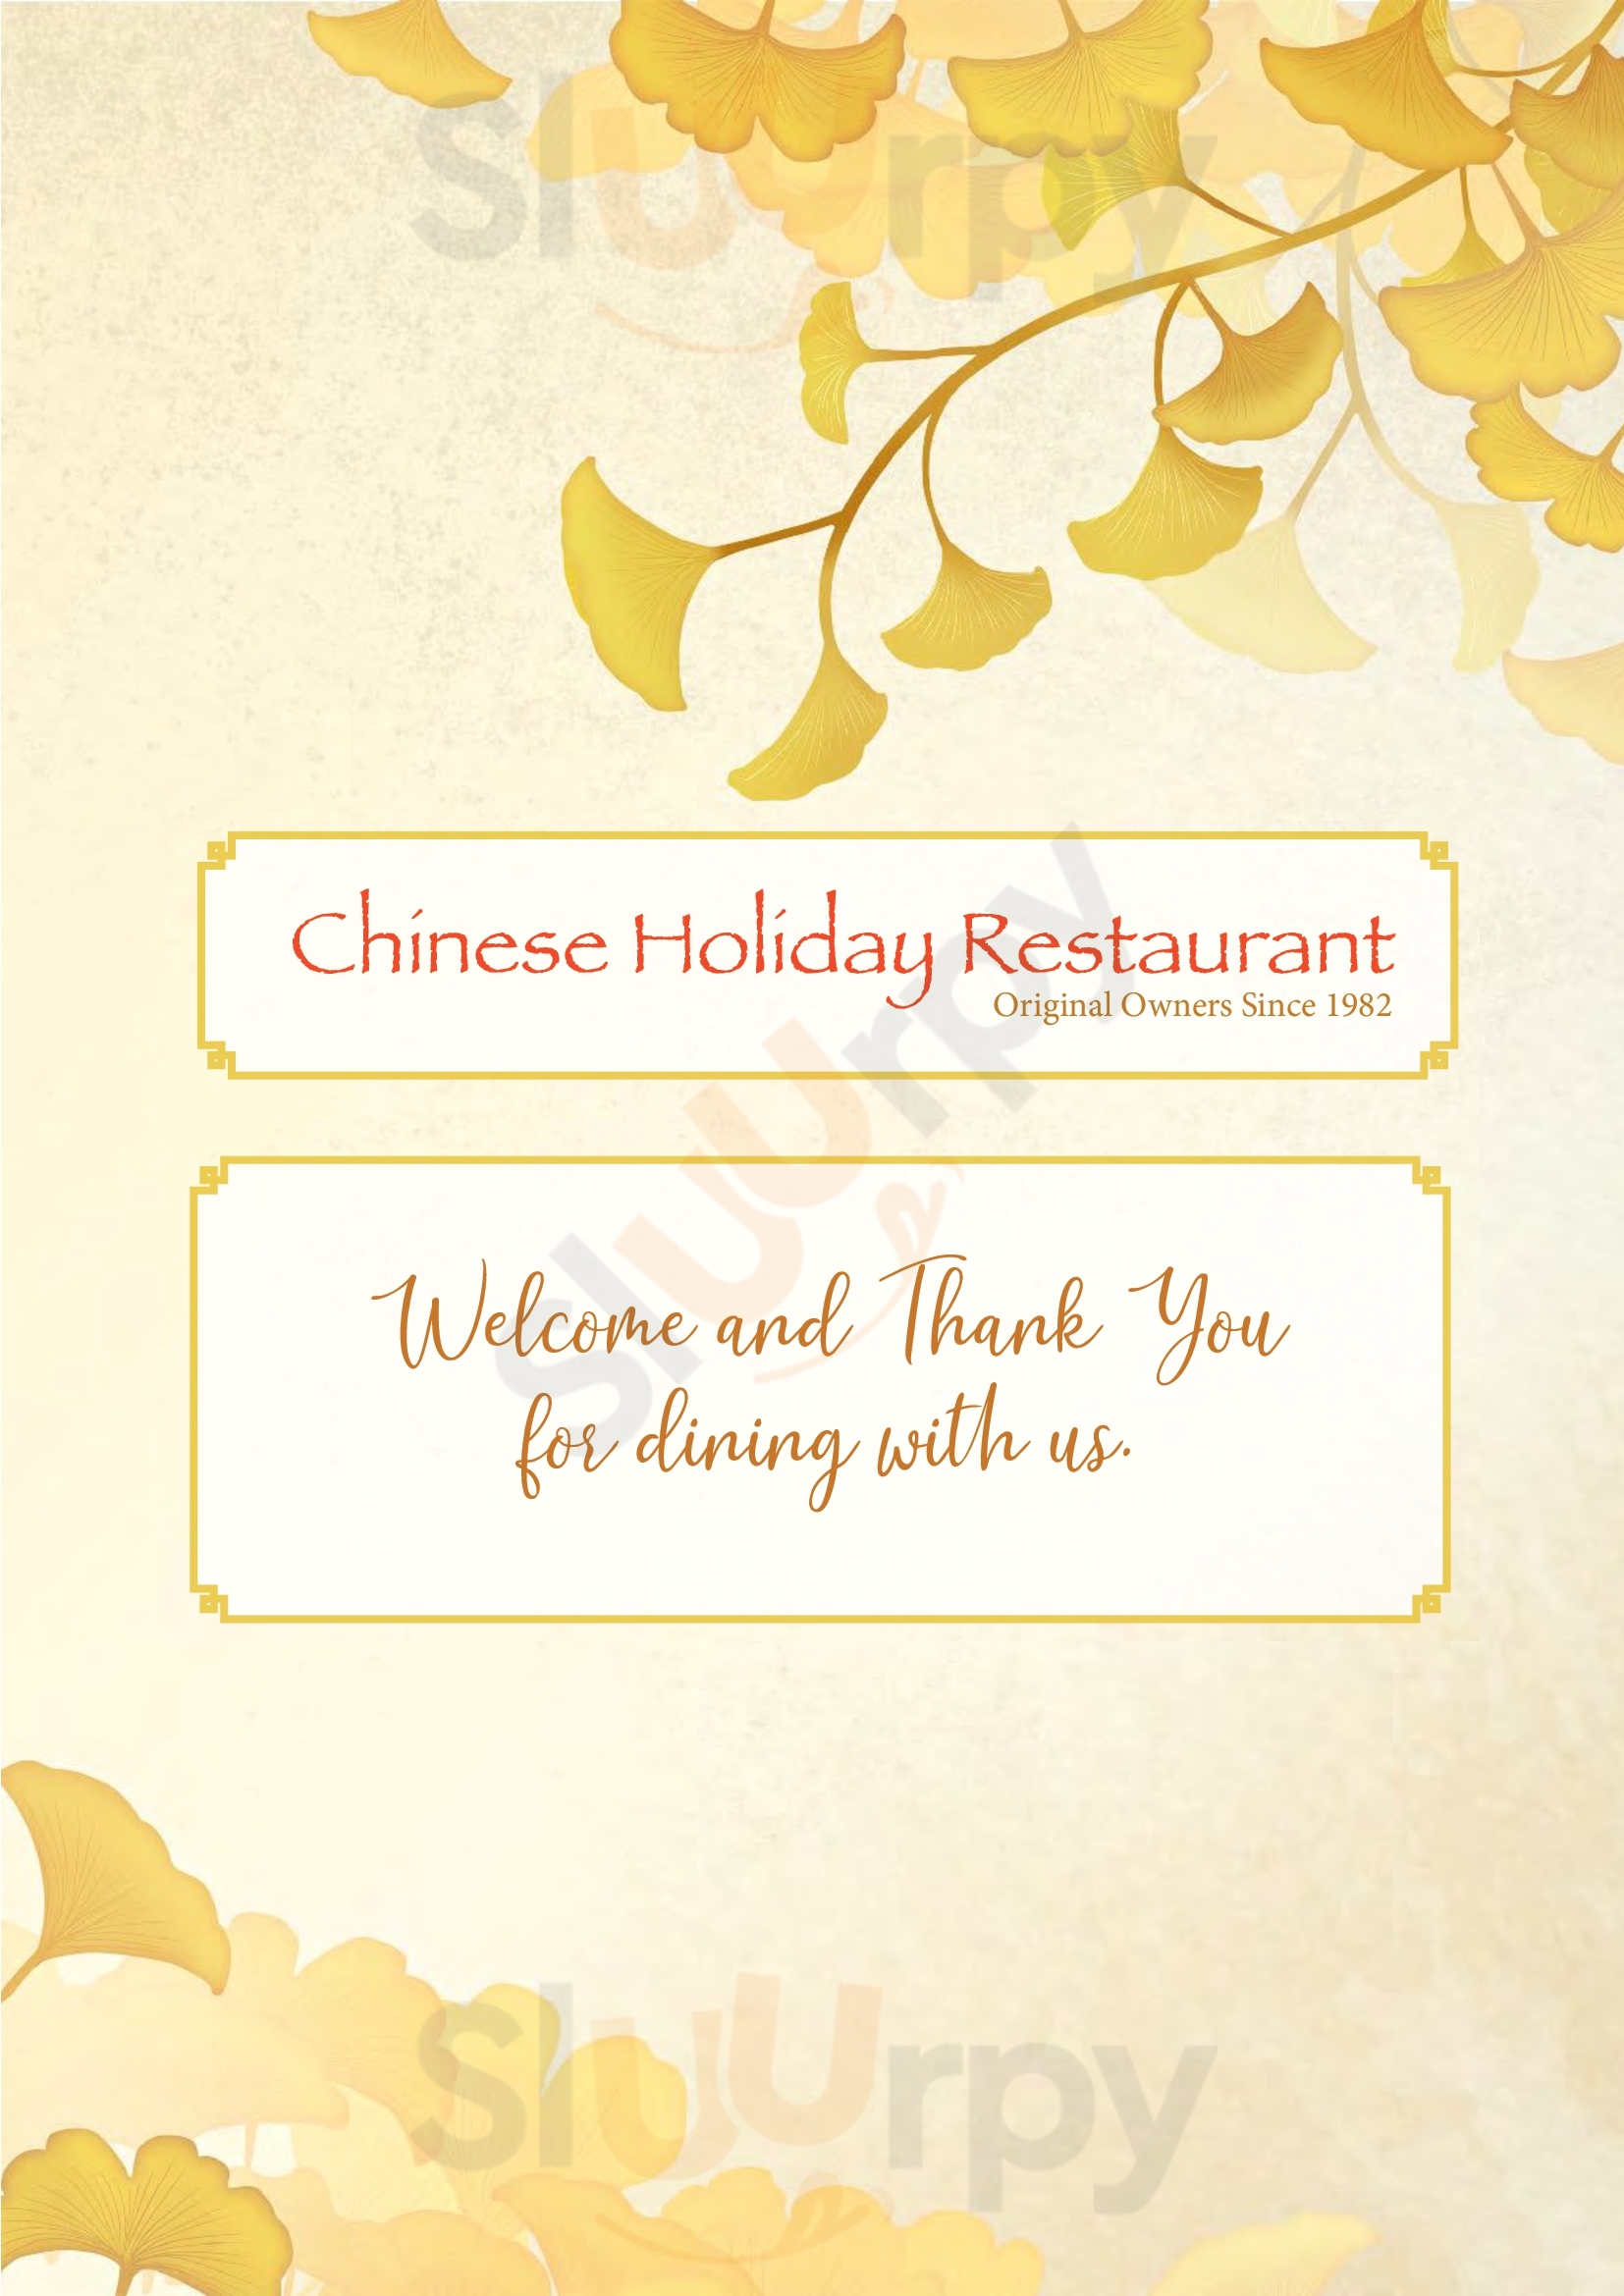 Chinese Holiday Restaurant Caloundra Menu - 1